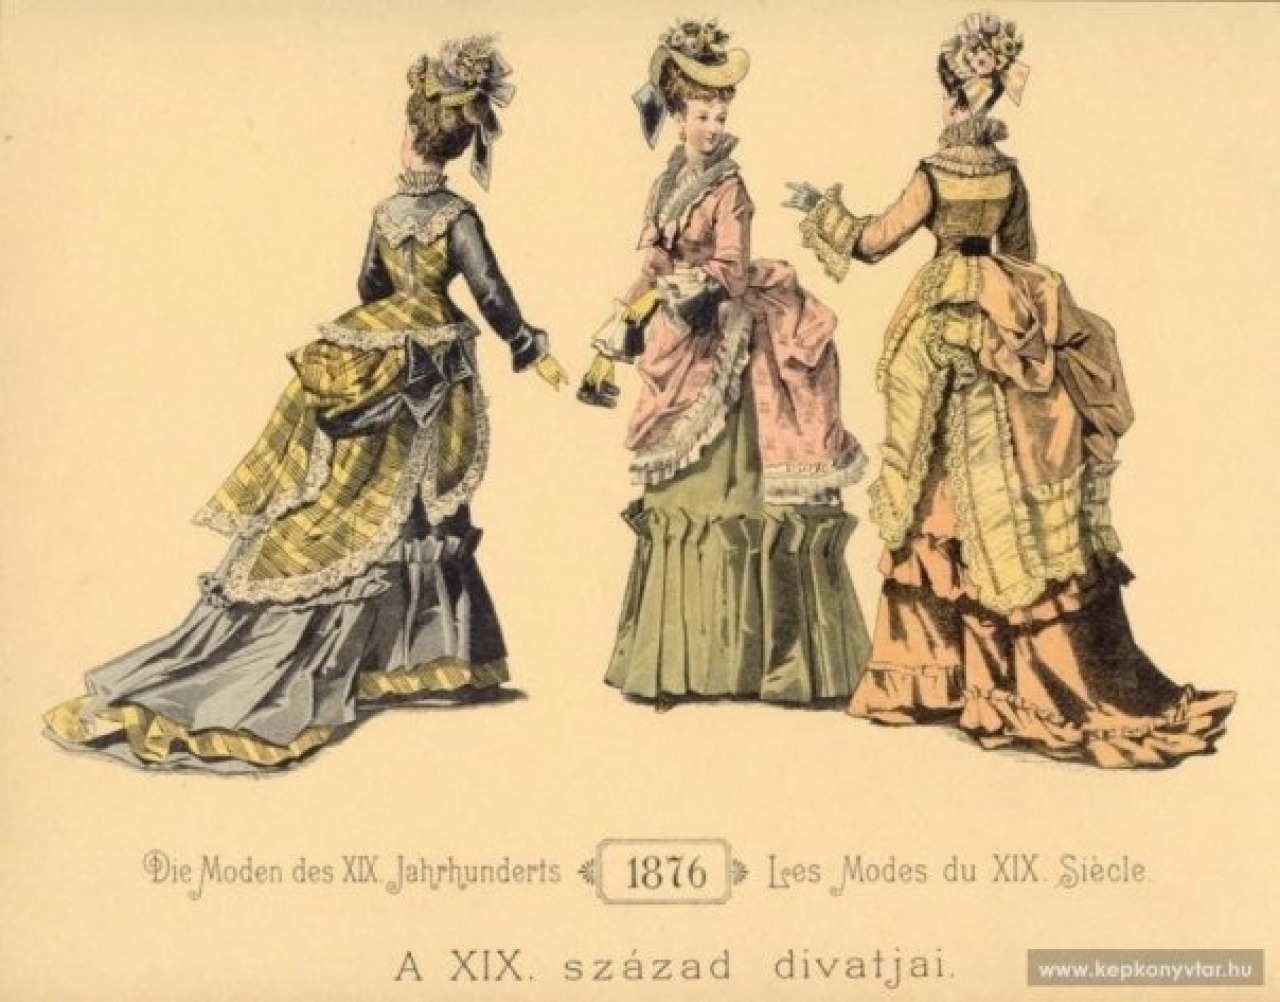 Мода 1876 простые граждане